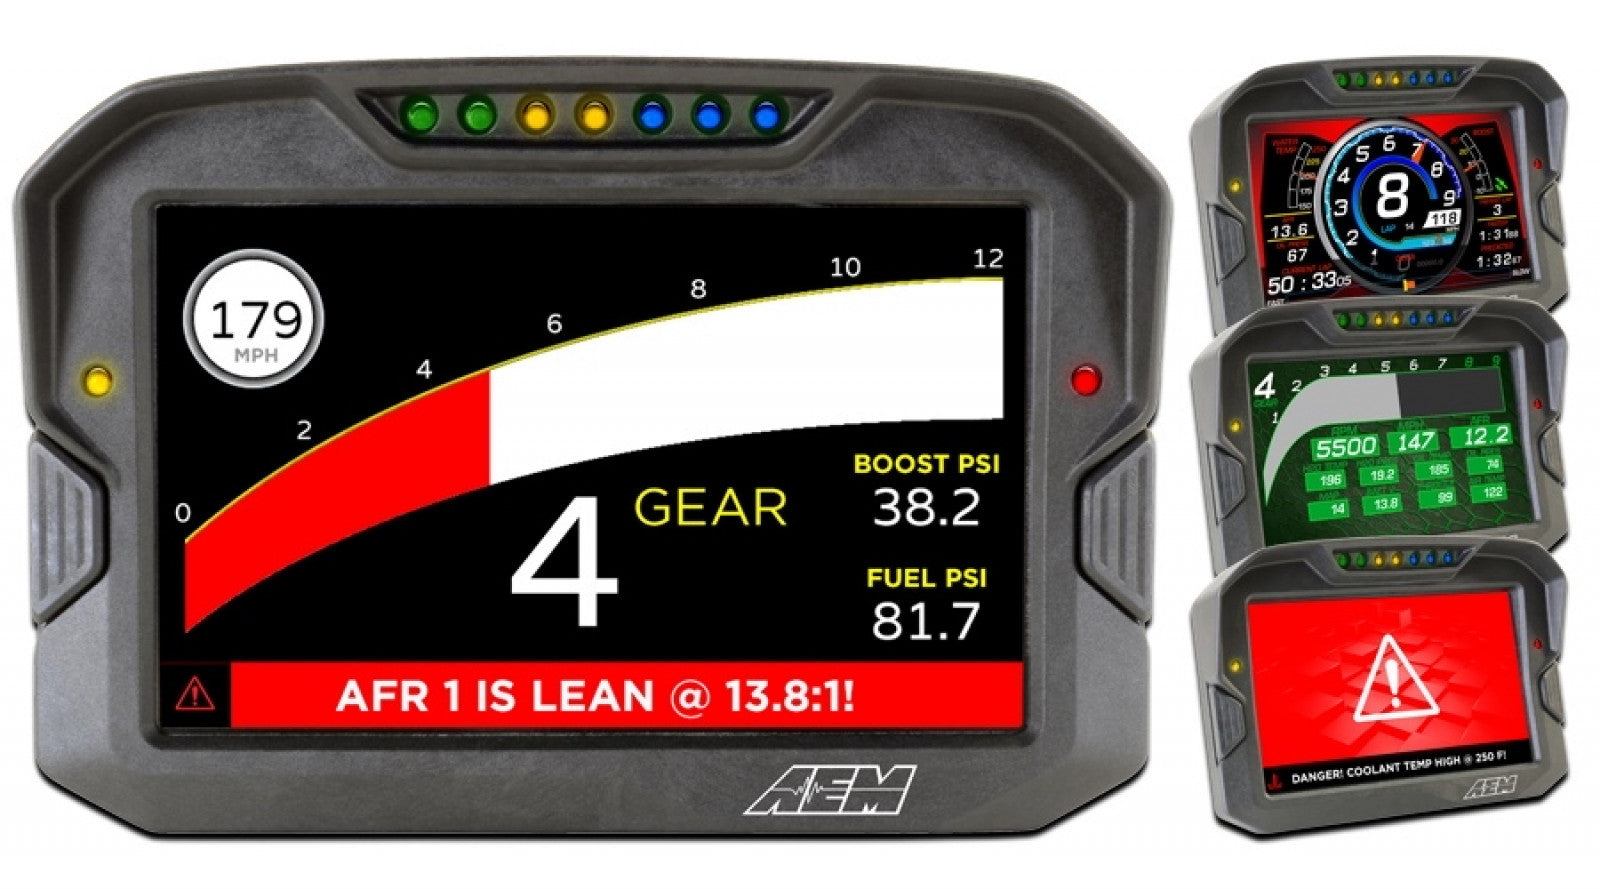 AEM Logging/GPS Enabled CD-7 Carbon Digital Racing Dash